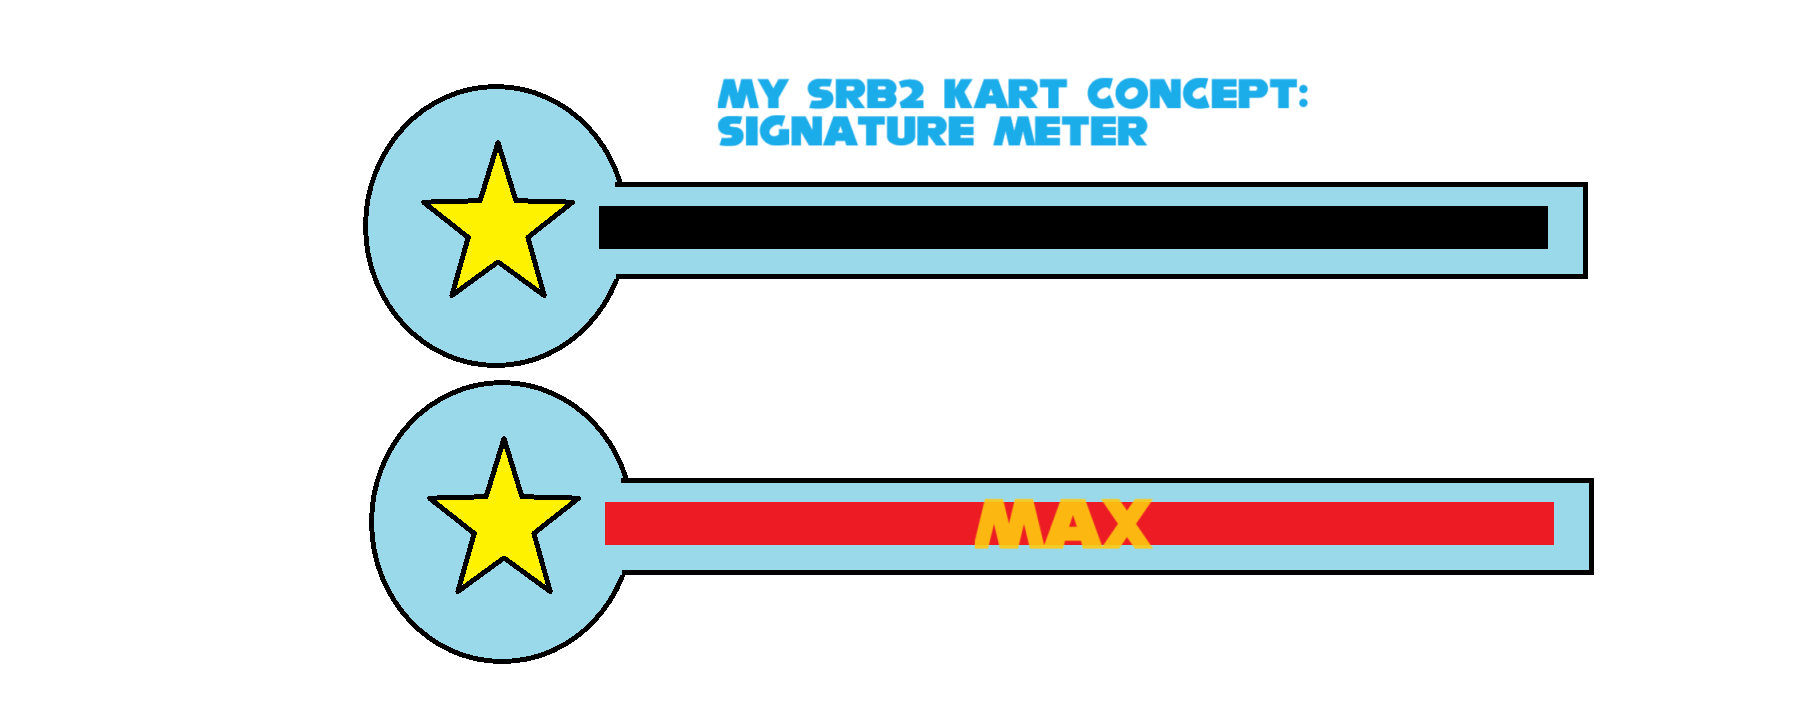 SRB2 Kart Concept Signature Meter.png